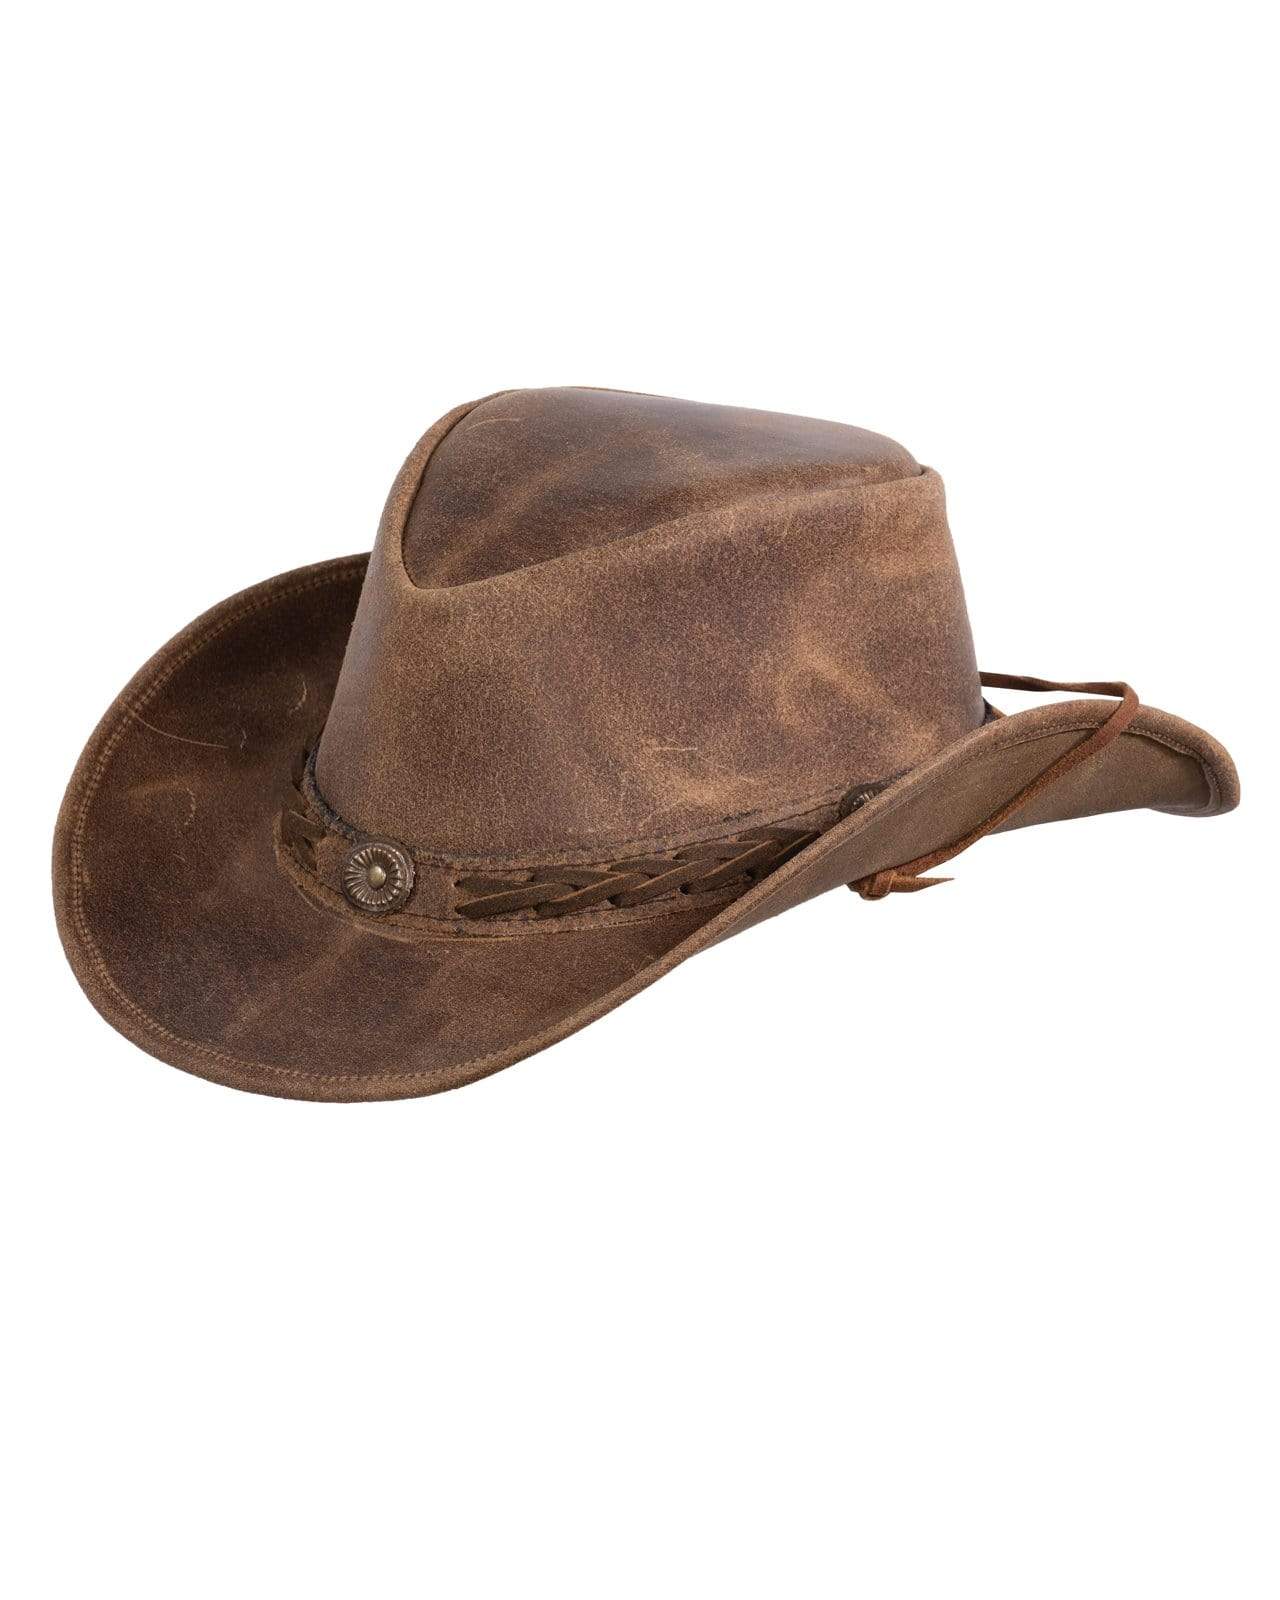 Ridge Leather Western Hat [13011] : OldTradingPost.com Western Store is ...